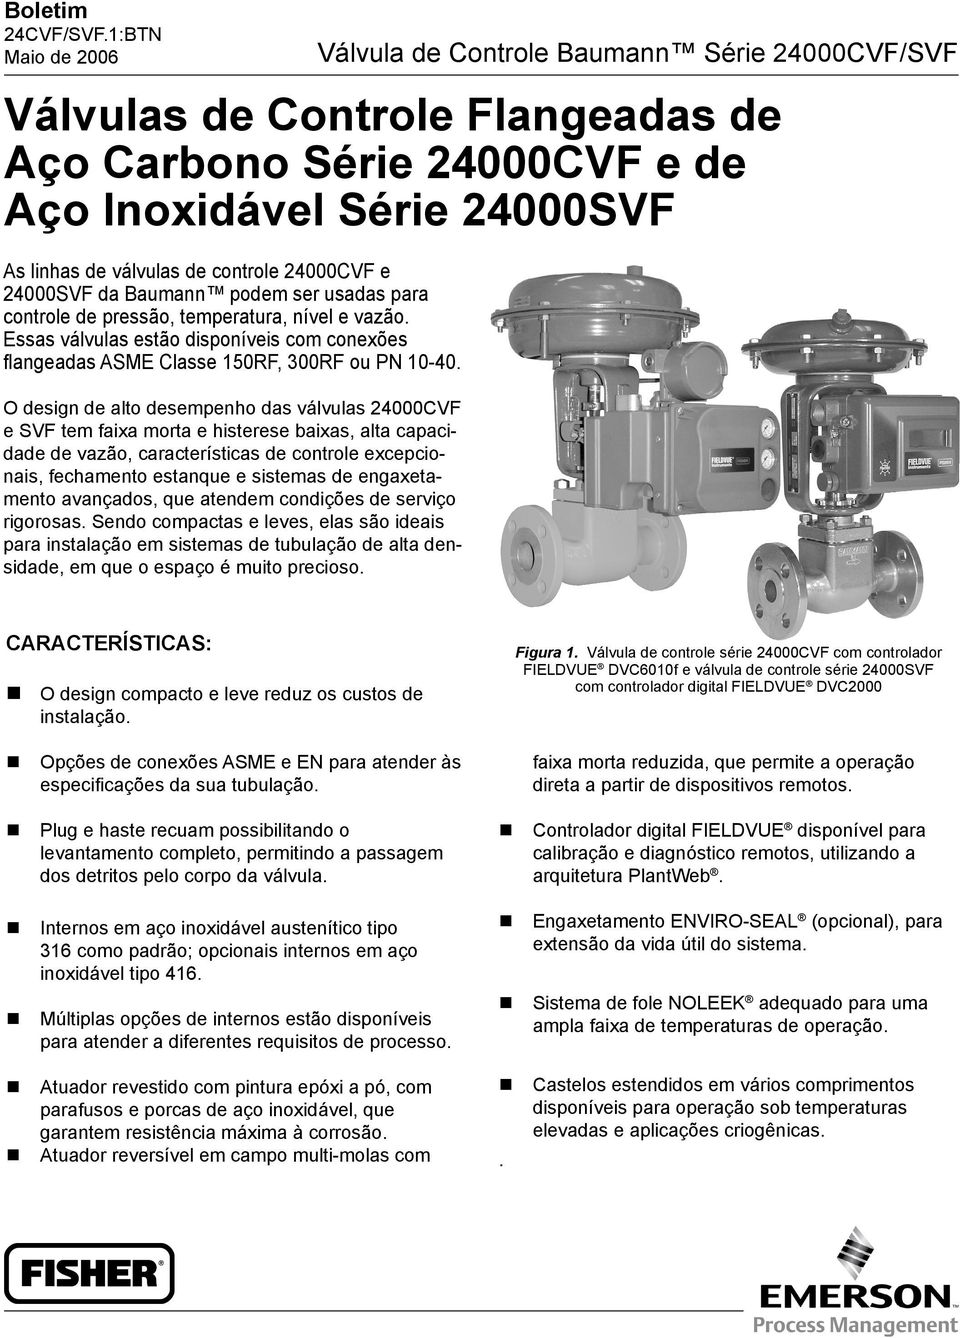 O design de alto desempenho das válvulas 24000CVF e SVF tem faixa morta e histerese baixas, alta capacidade de vazão, características de controle excepcionais, fechamento estanque e sistemas de